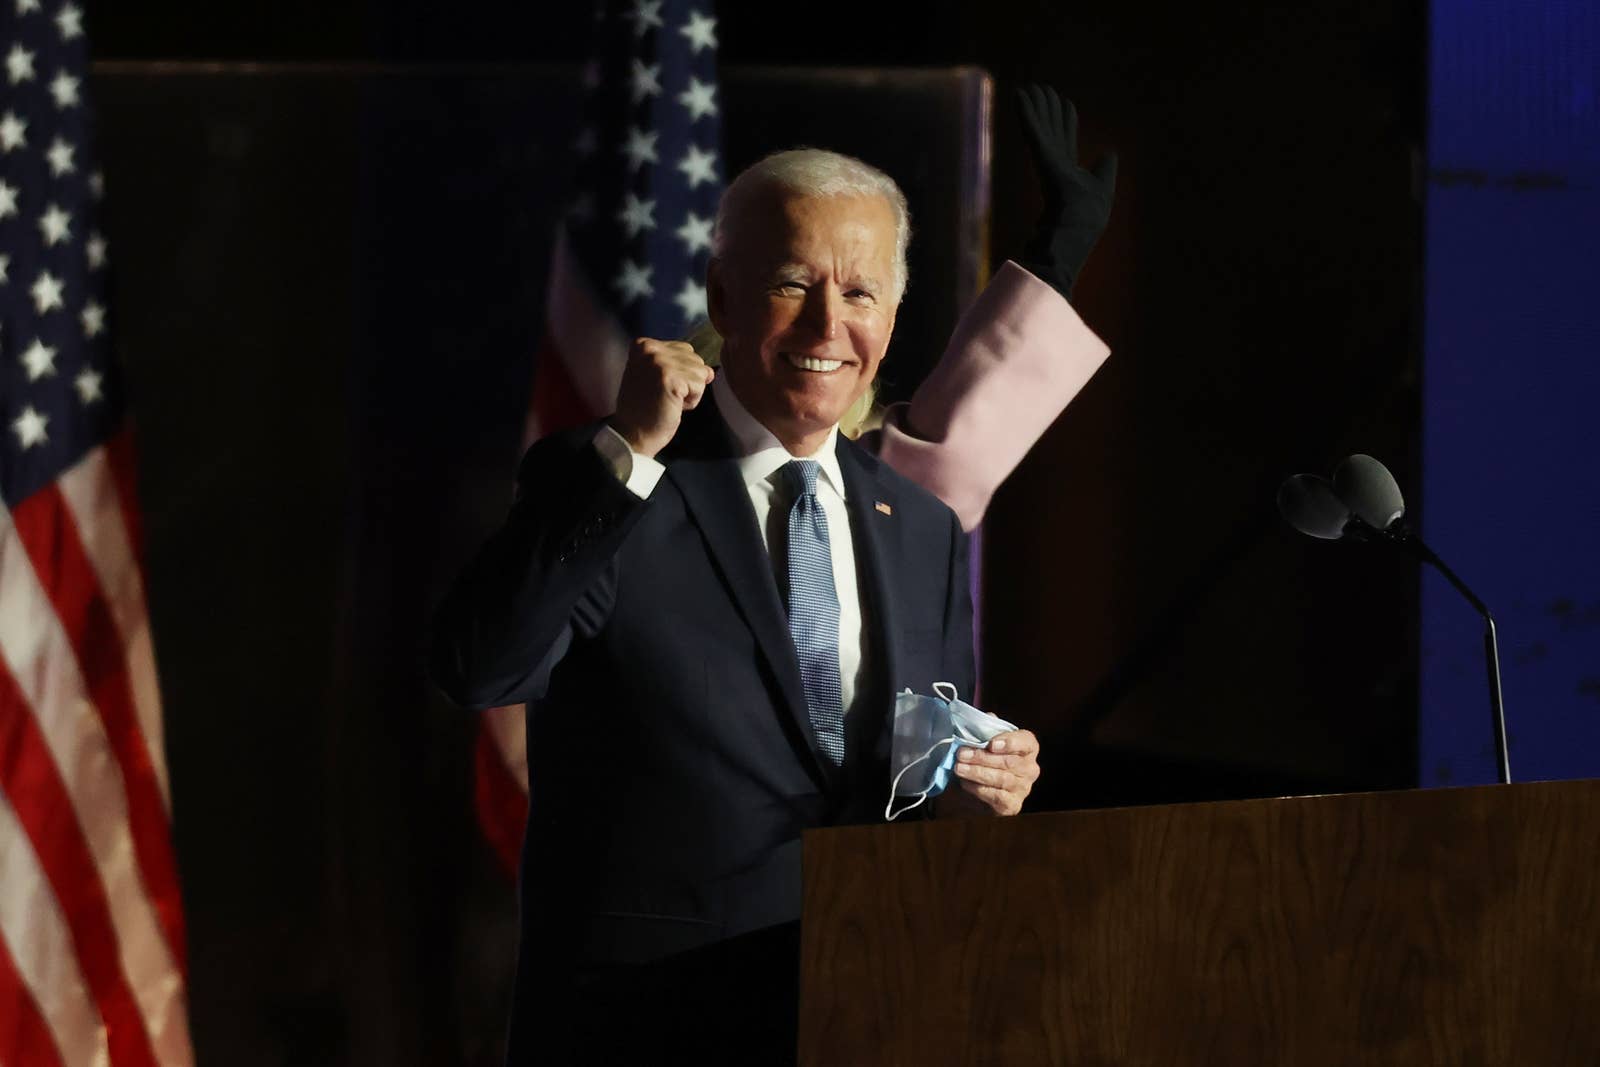 Biden pumps his fist while standing a podium